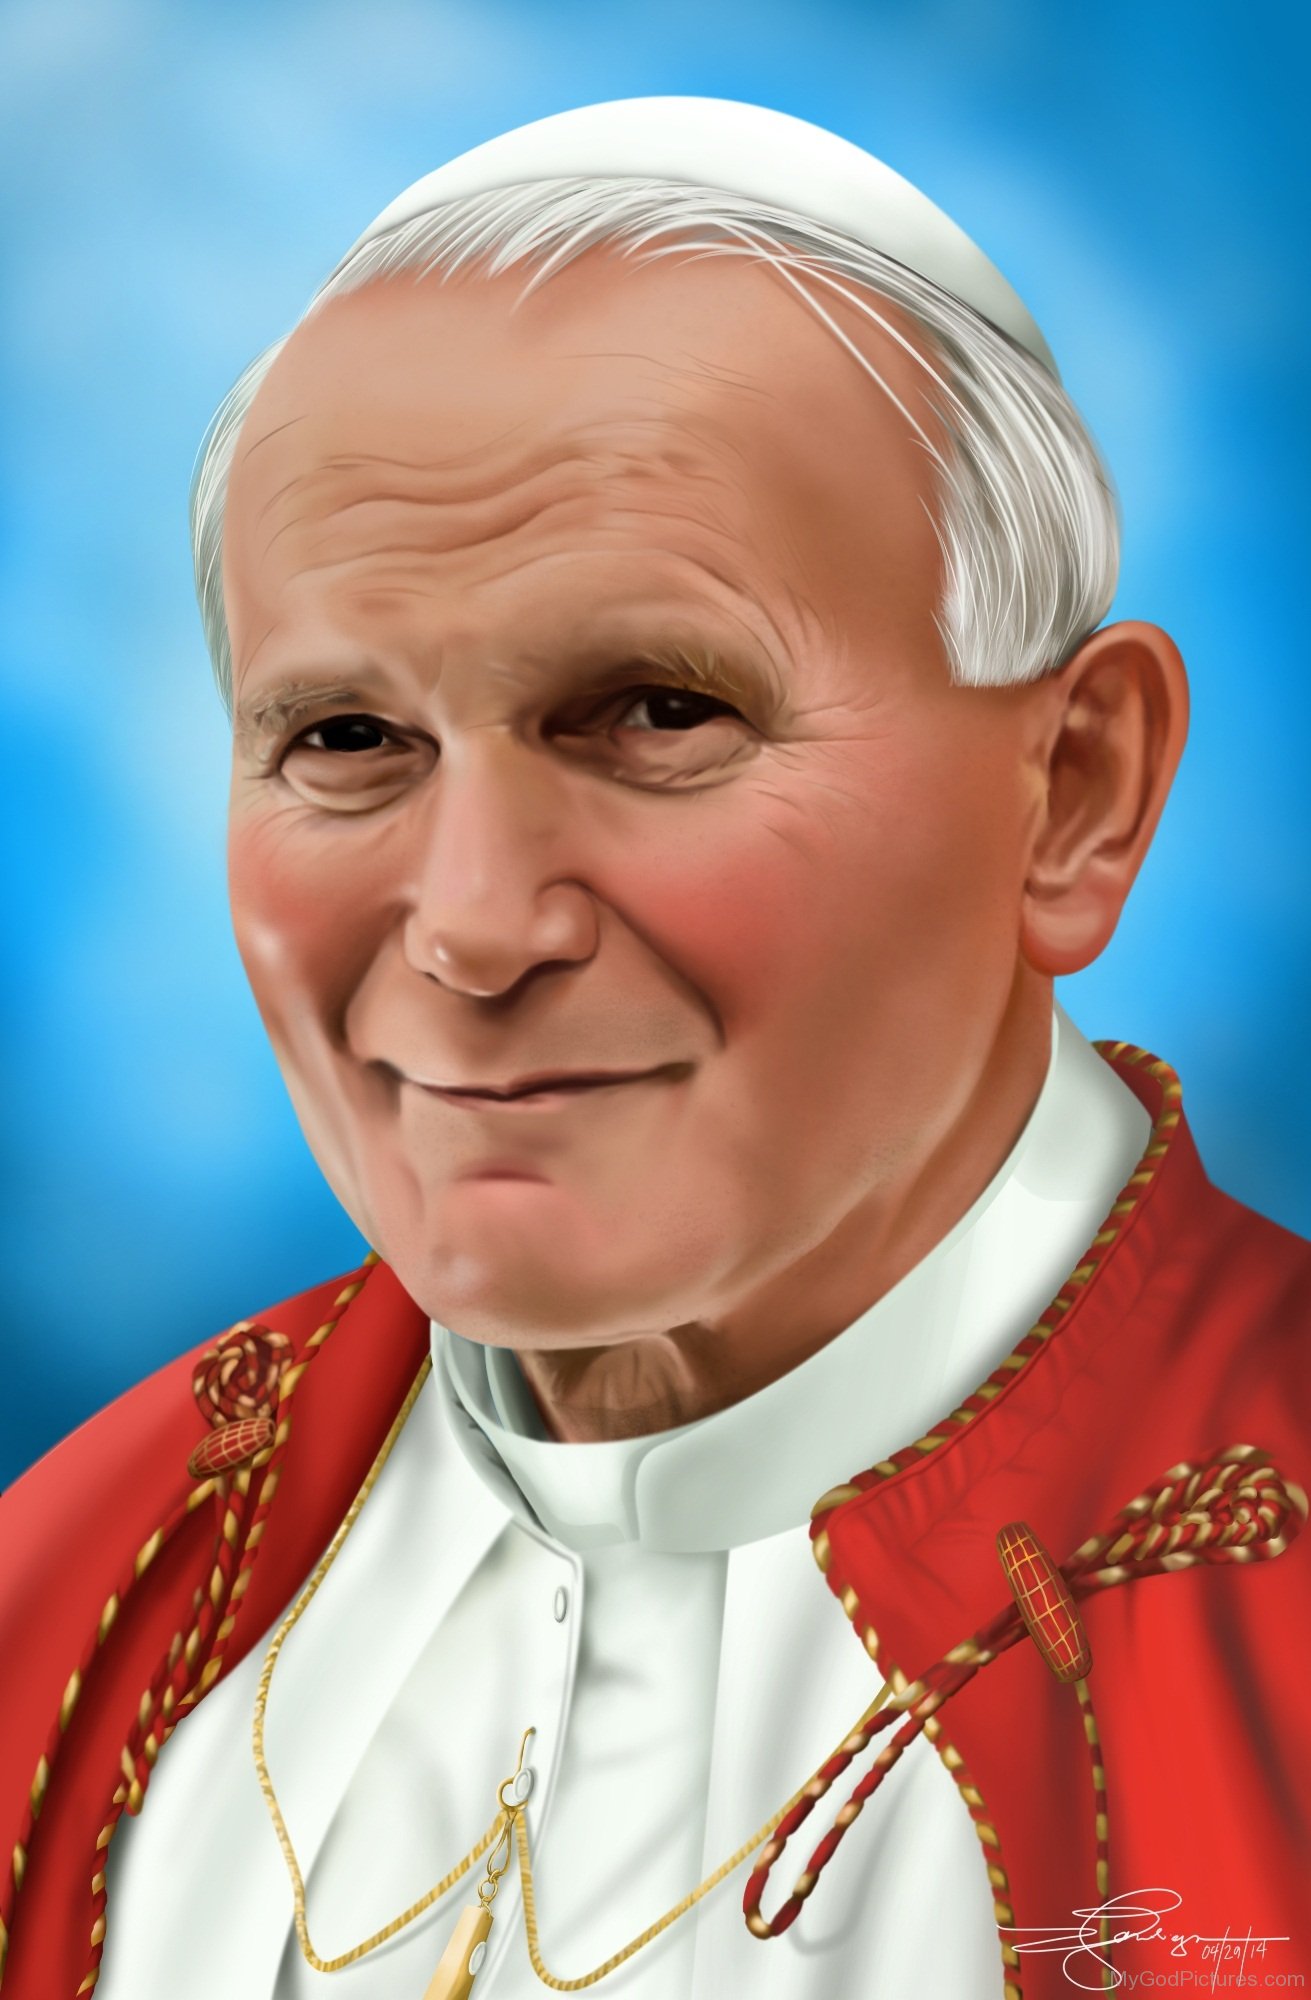 Saint John Paul II Jpii